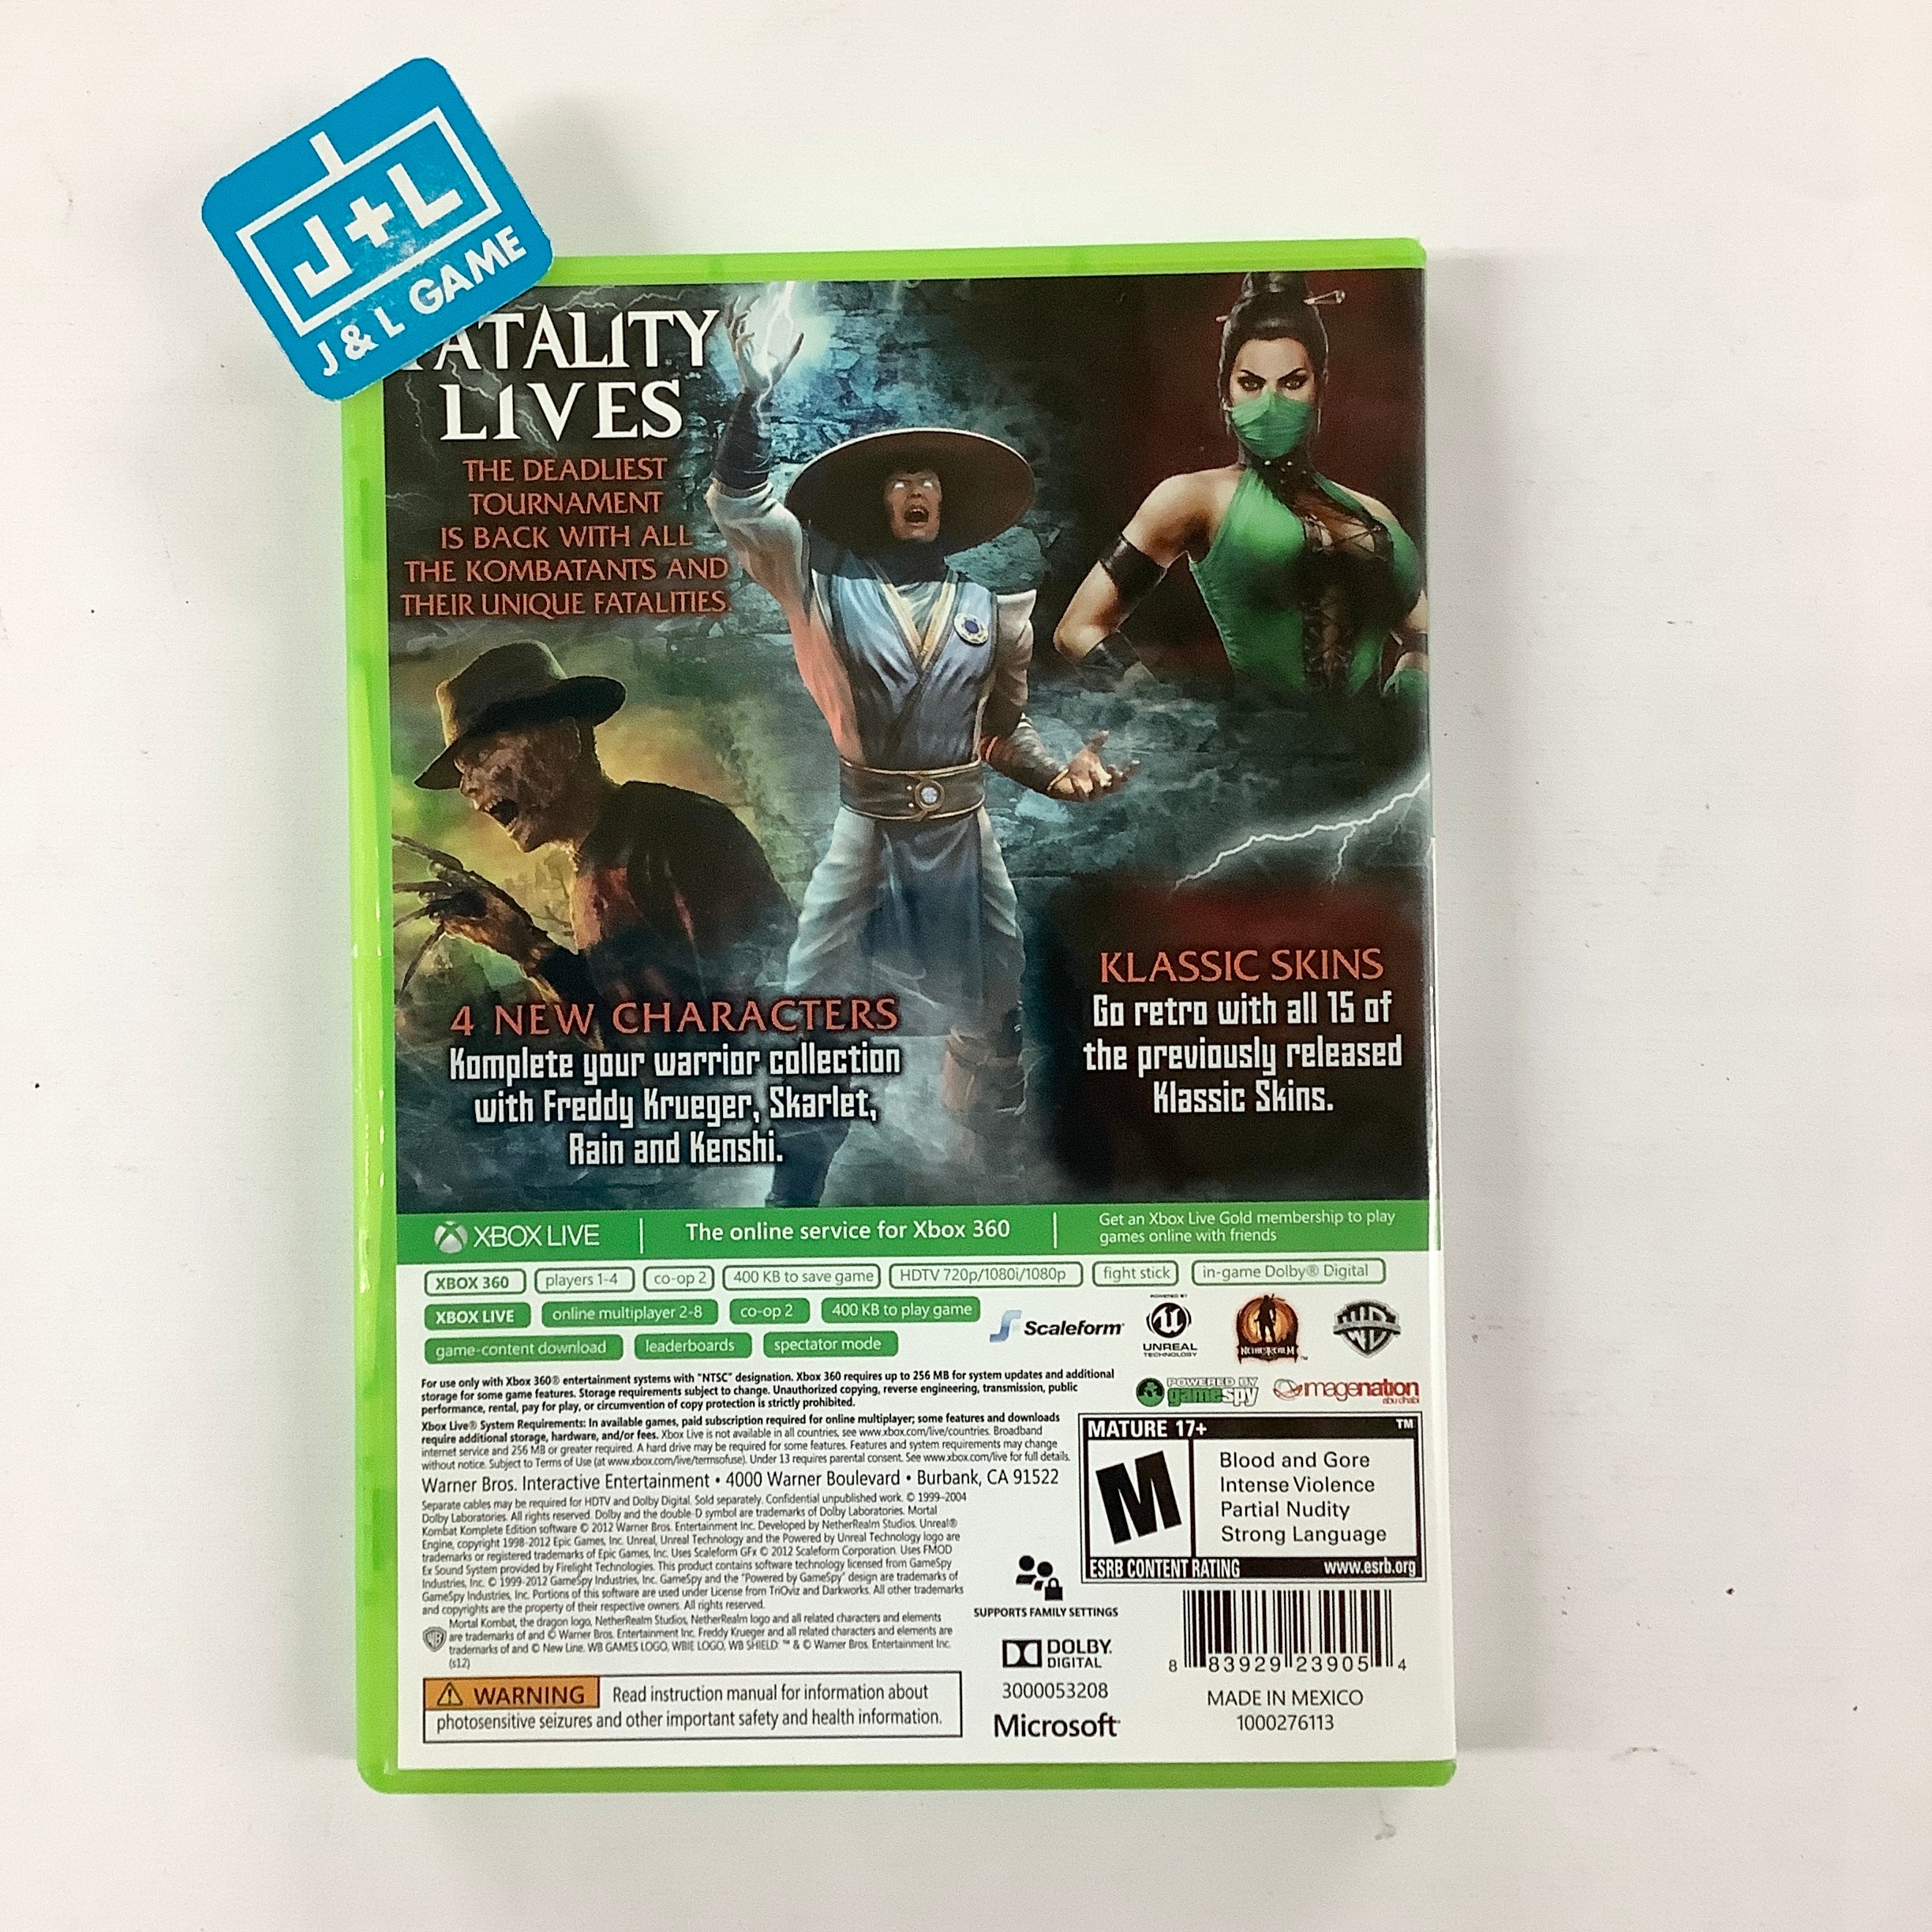 Mortal Kombat: Komplete Edition (Platinum Hits) - Xbox 360 [Pre-Owned] Video Games WB Games   